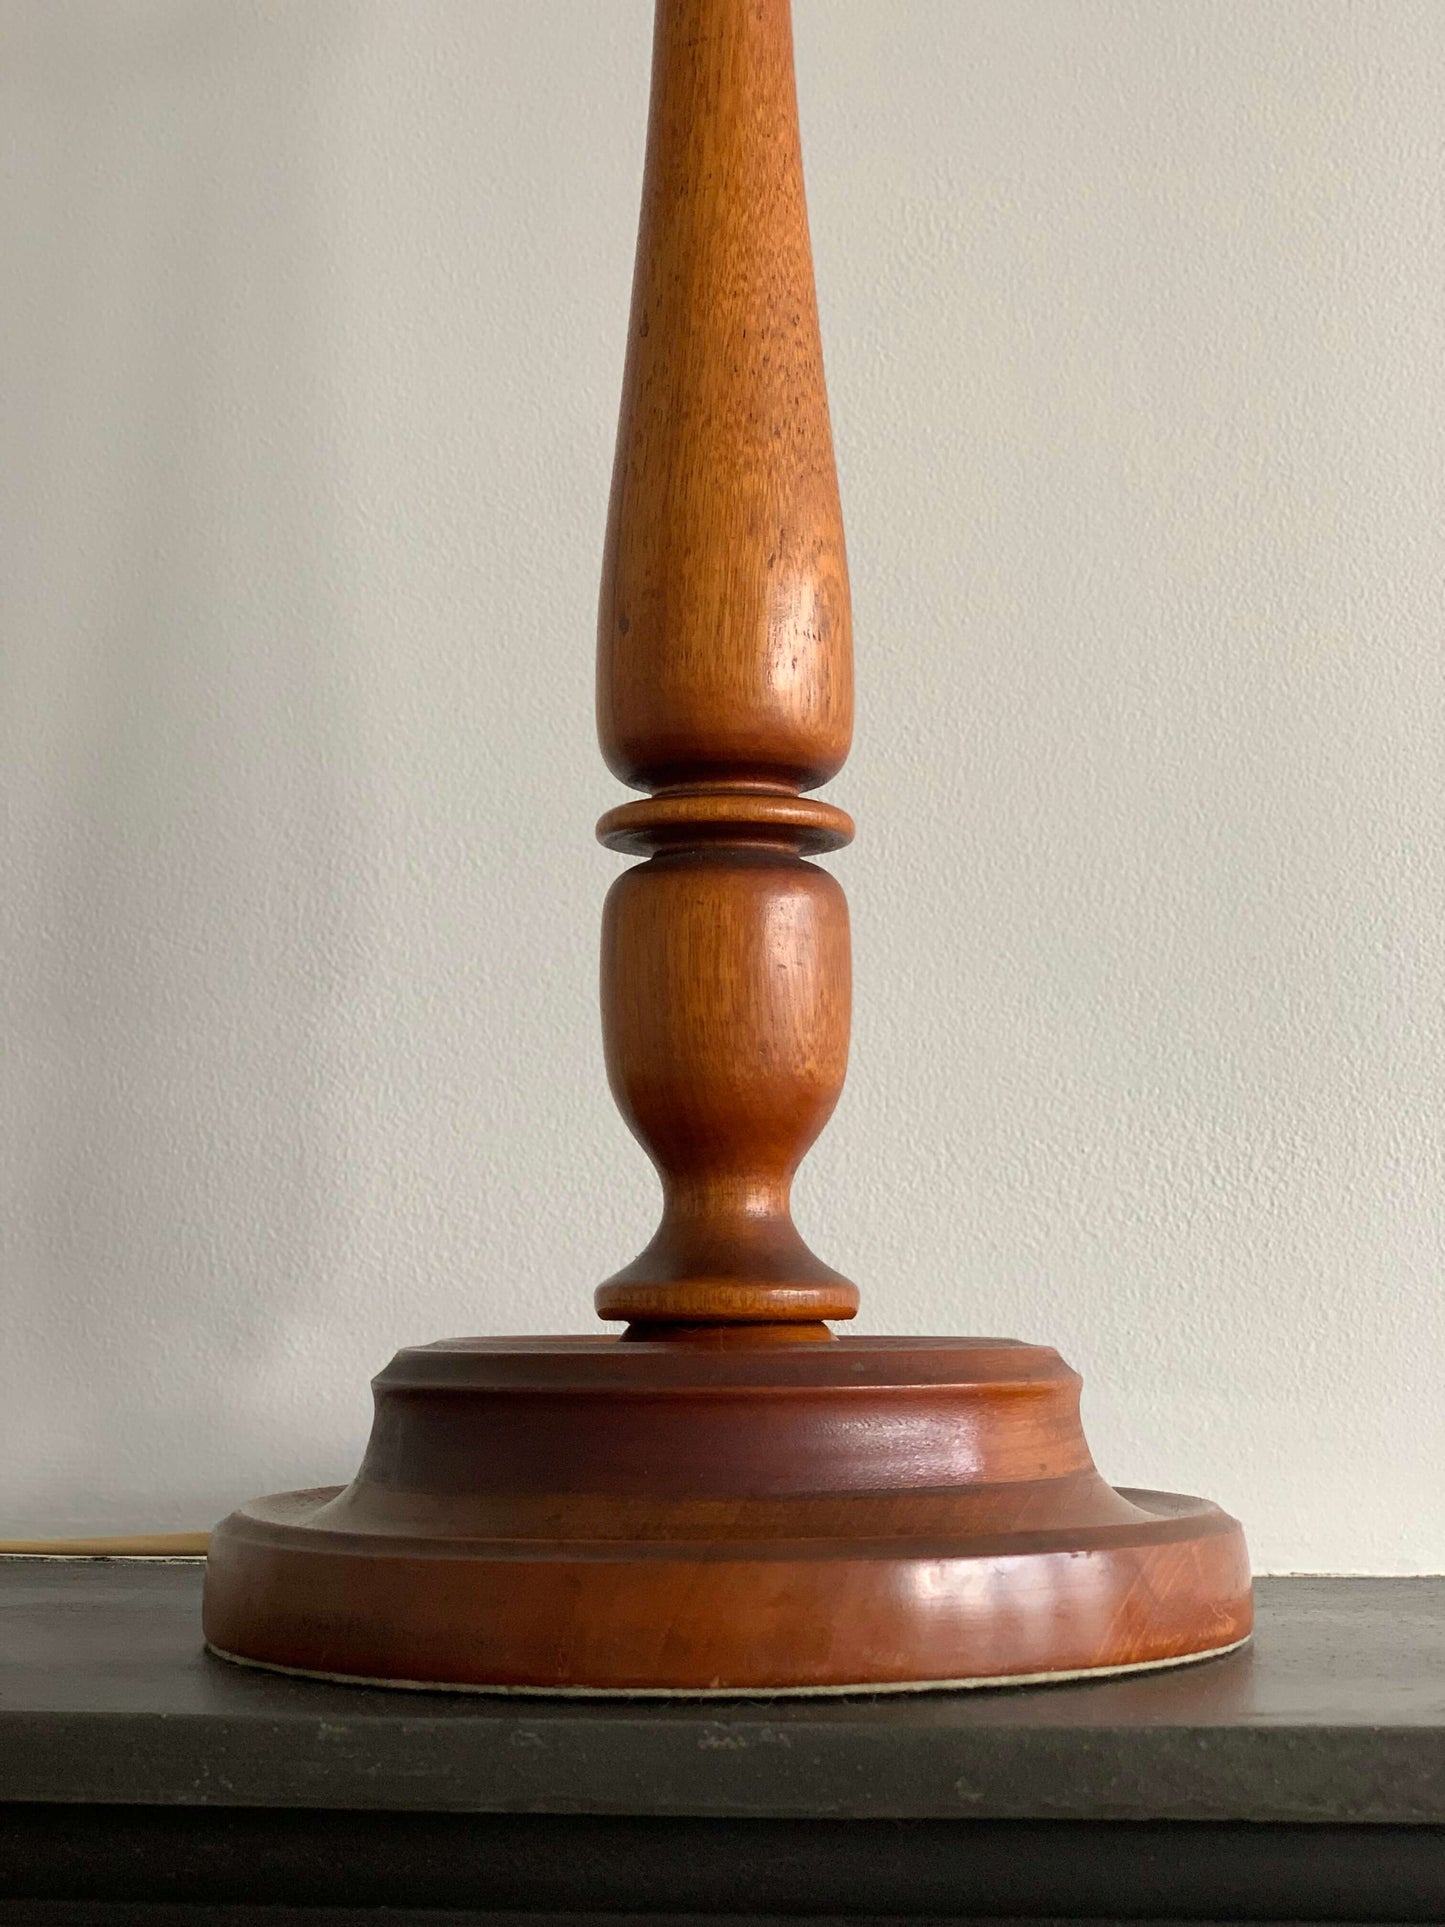 Large vintage wooden table lamp base